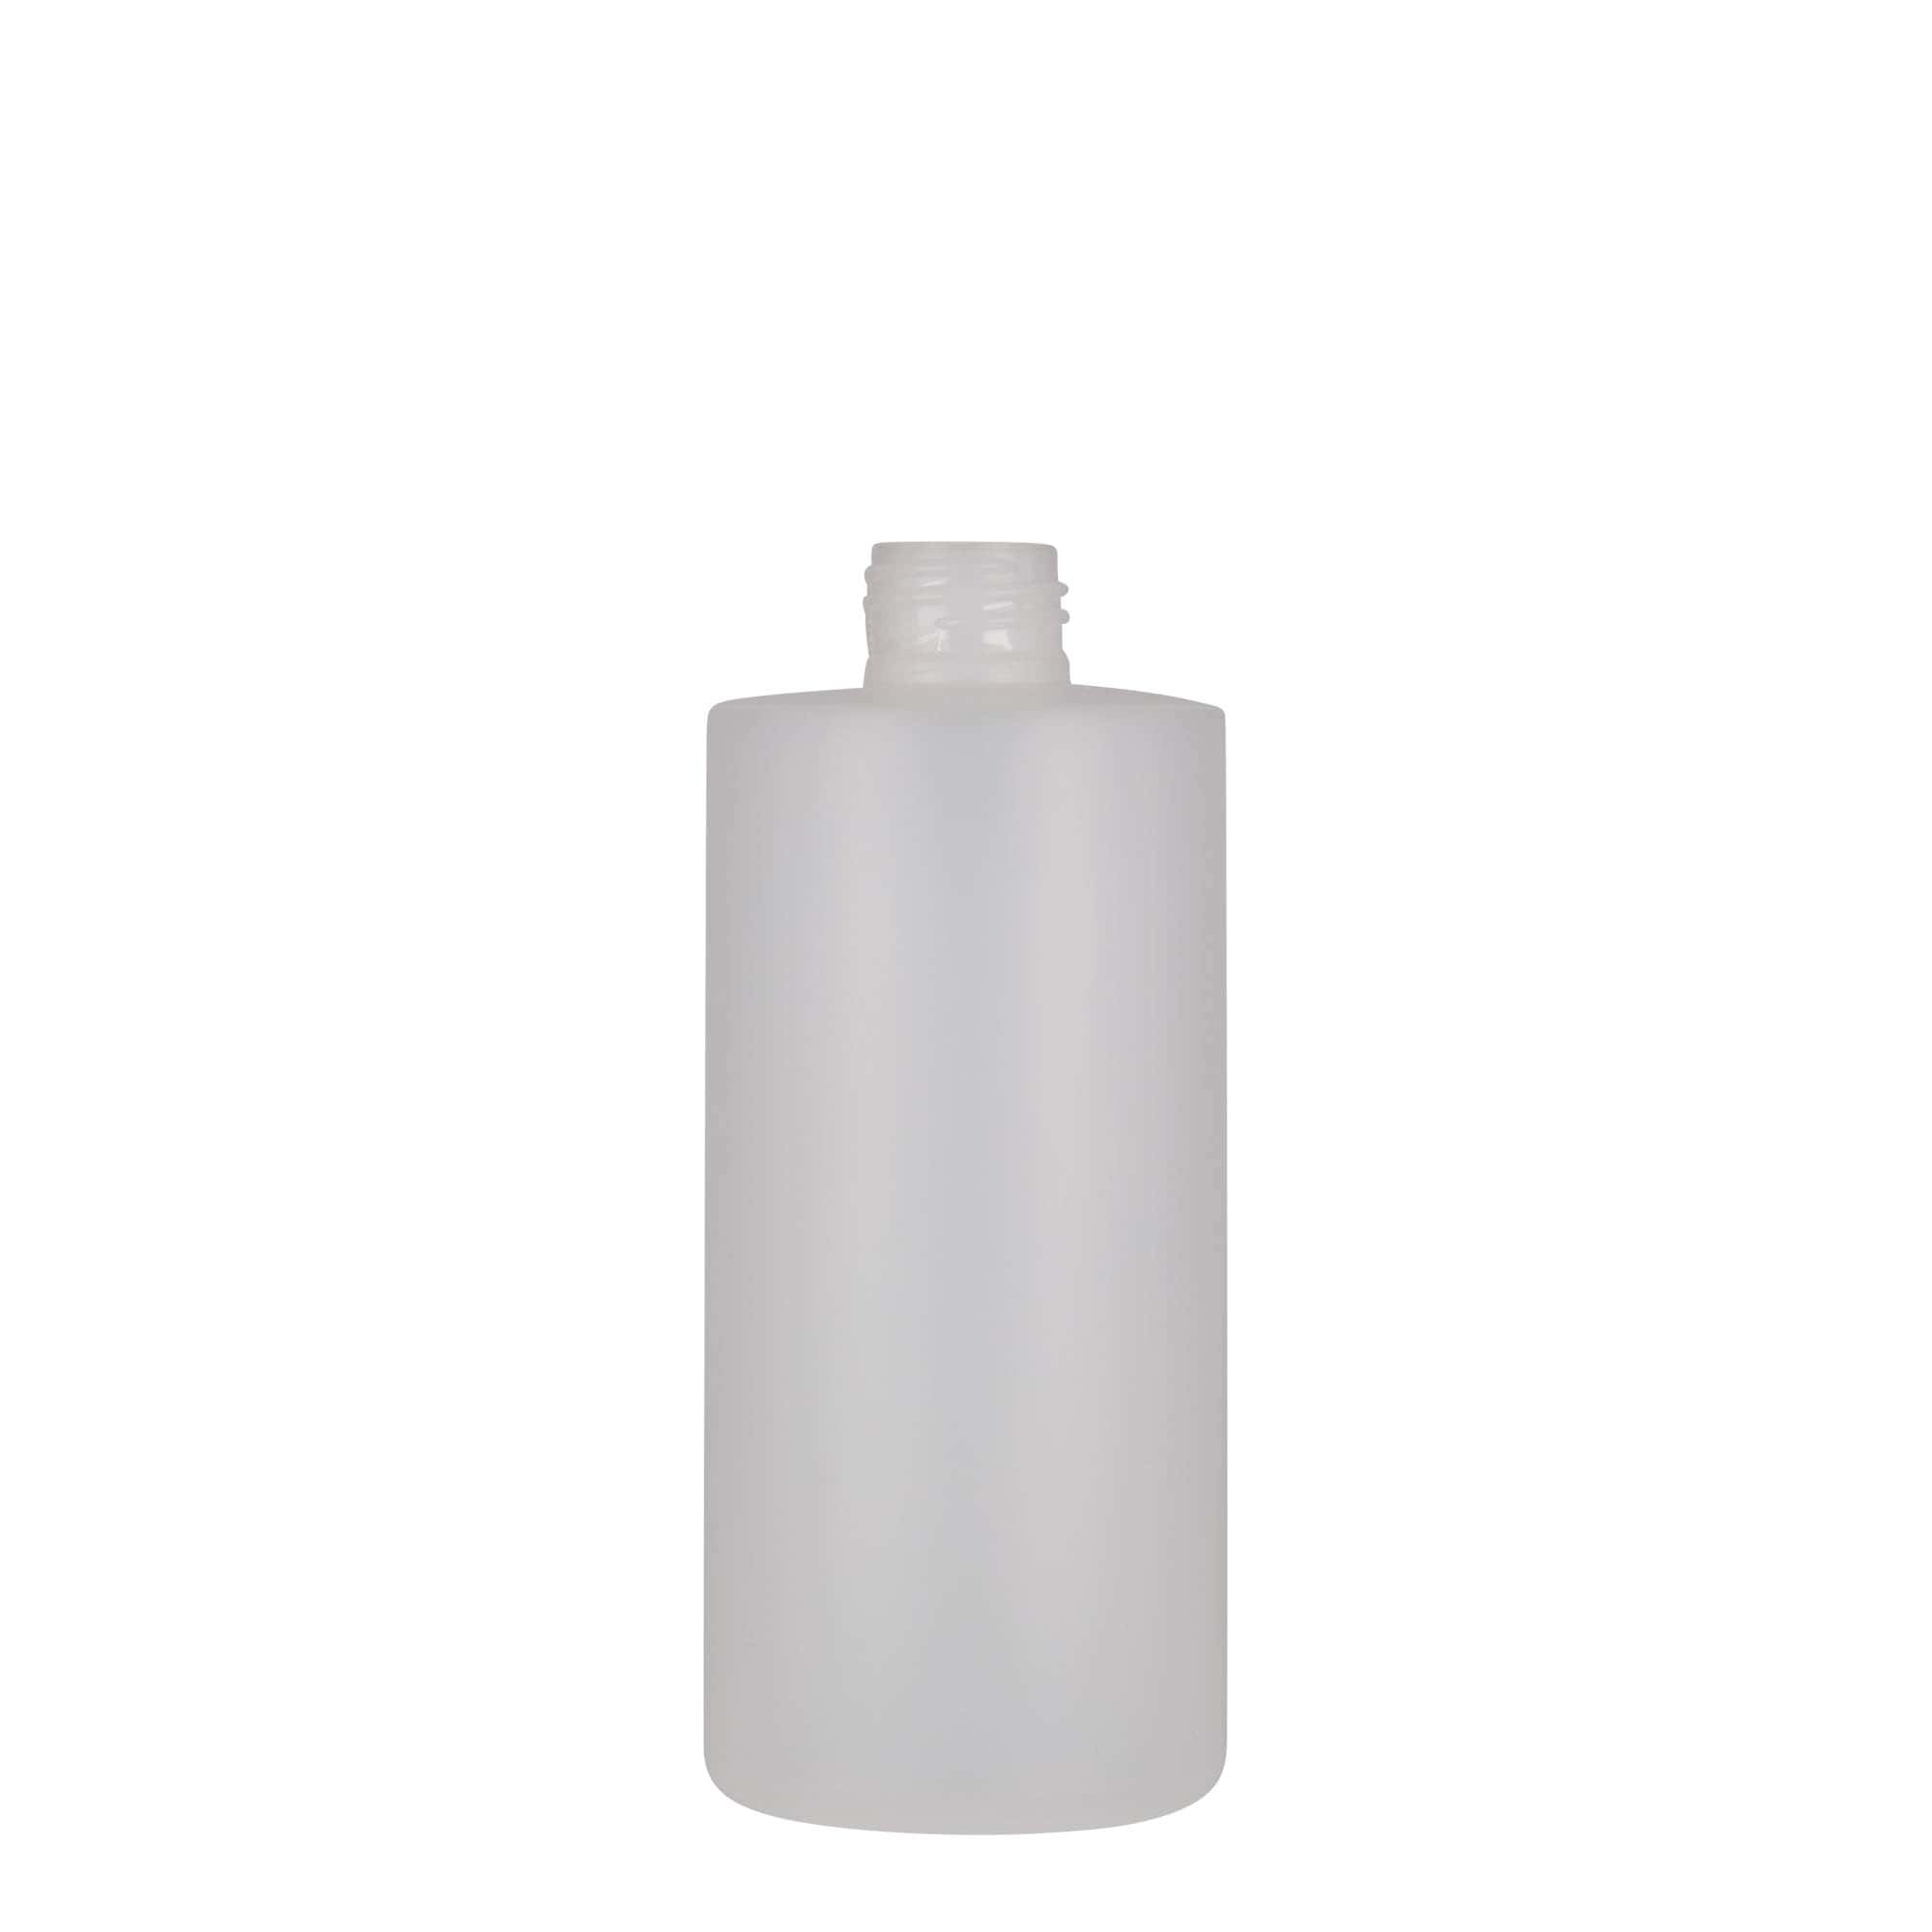 300 ml plastic bottle 'Pipe', HDPE, white, closure: GPI 24/410